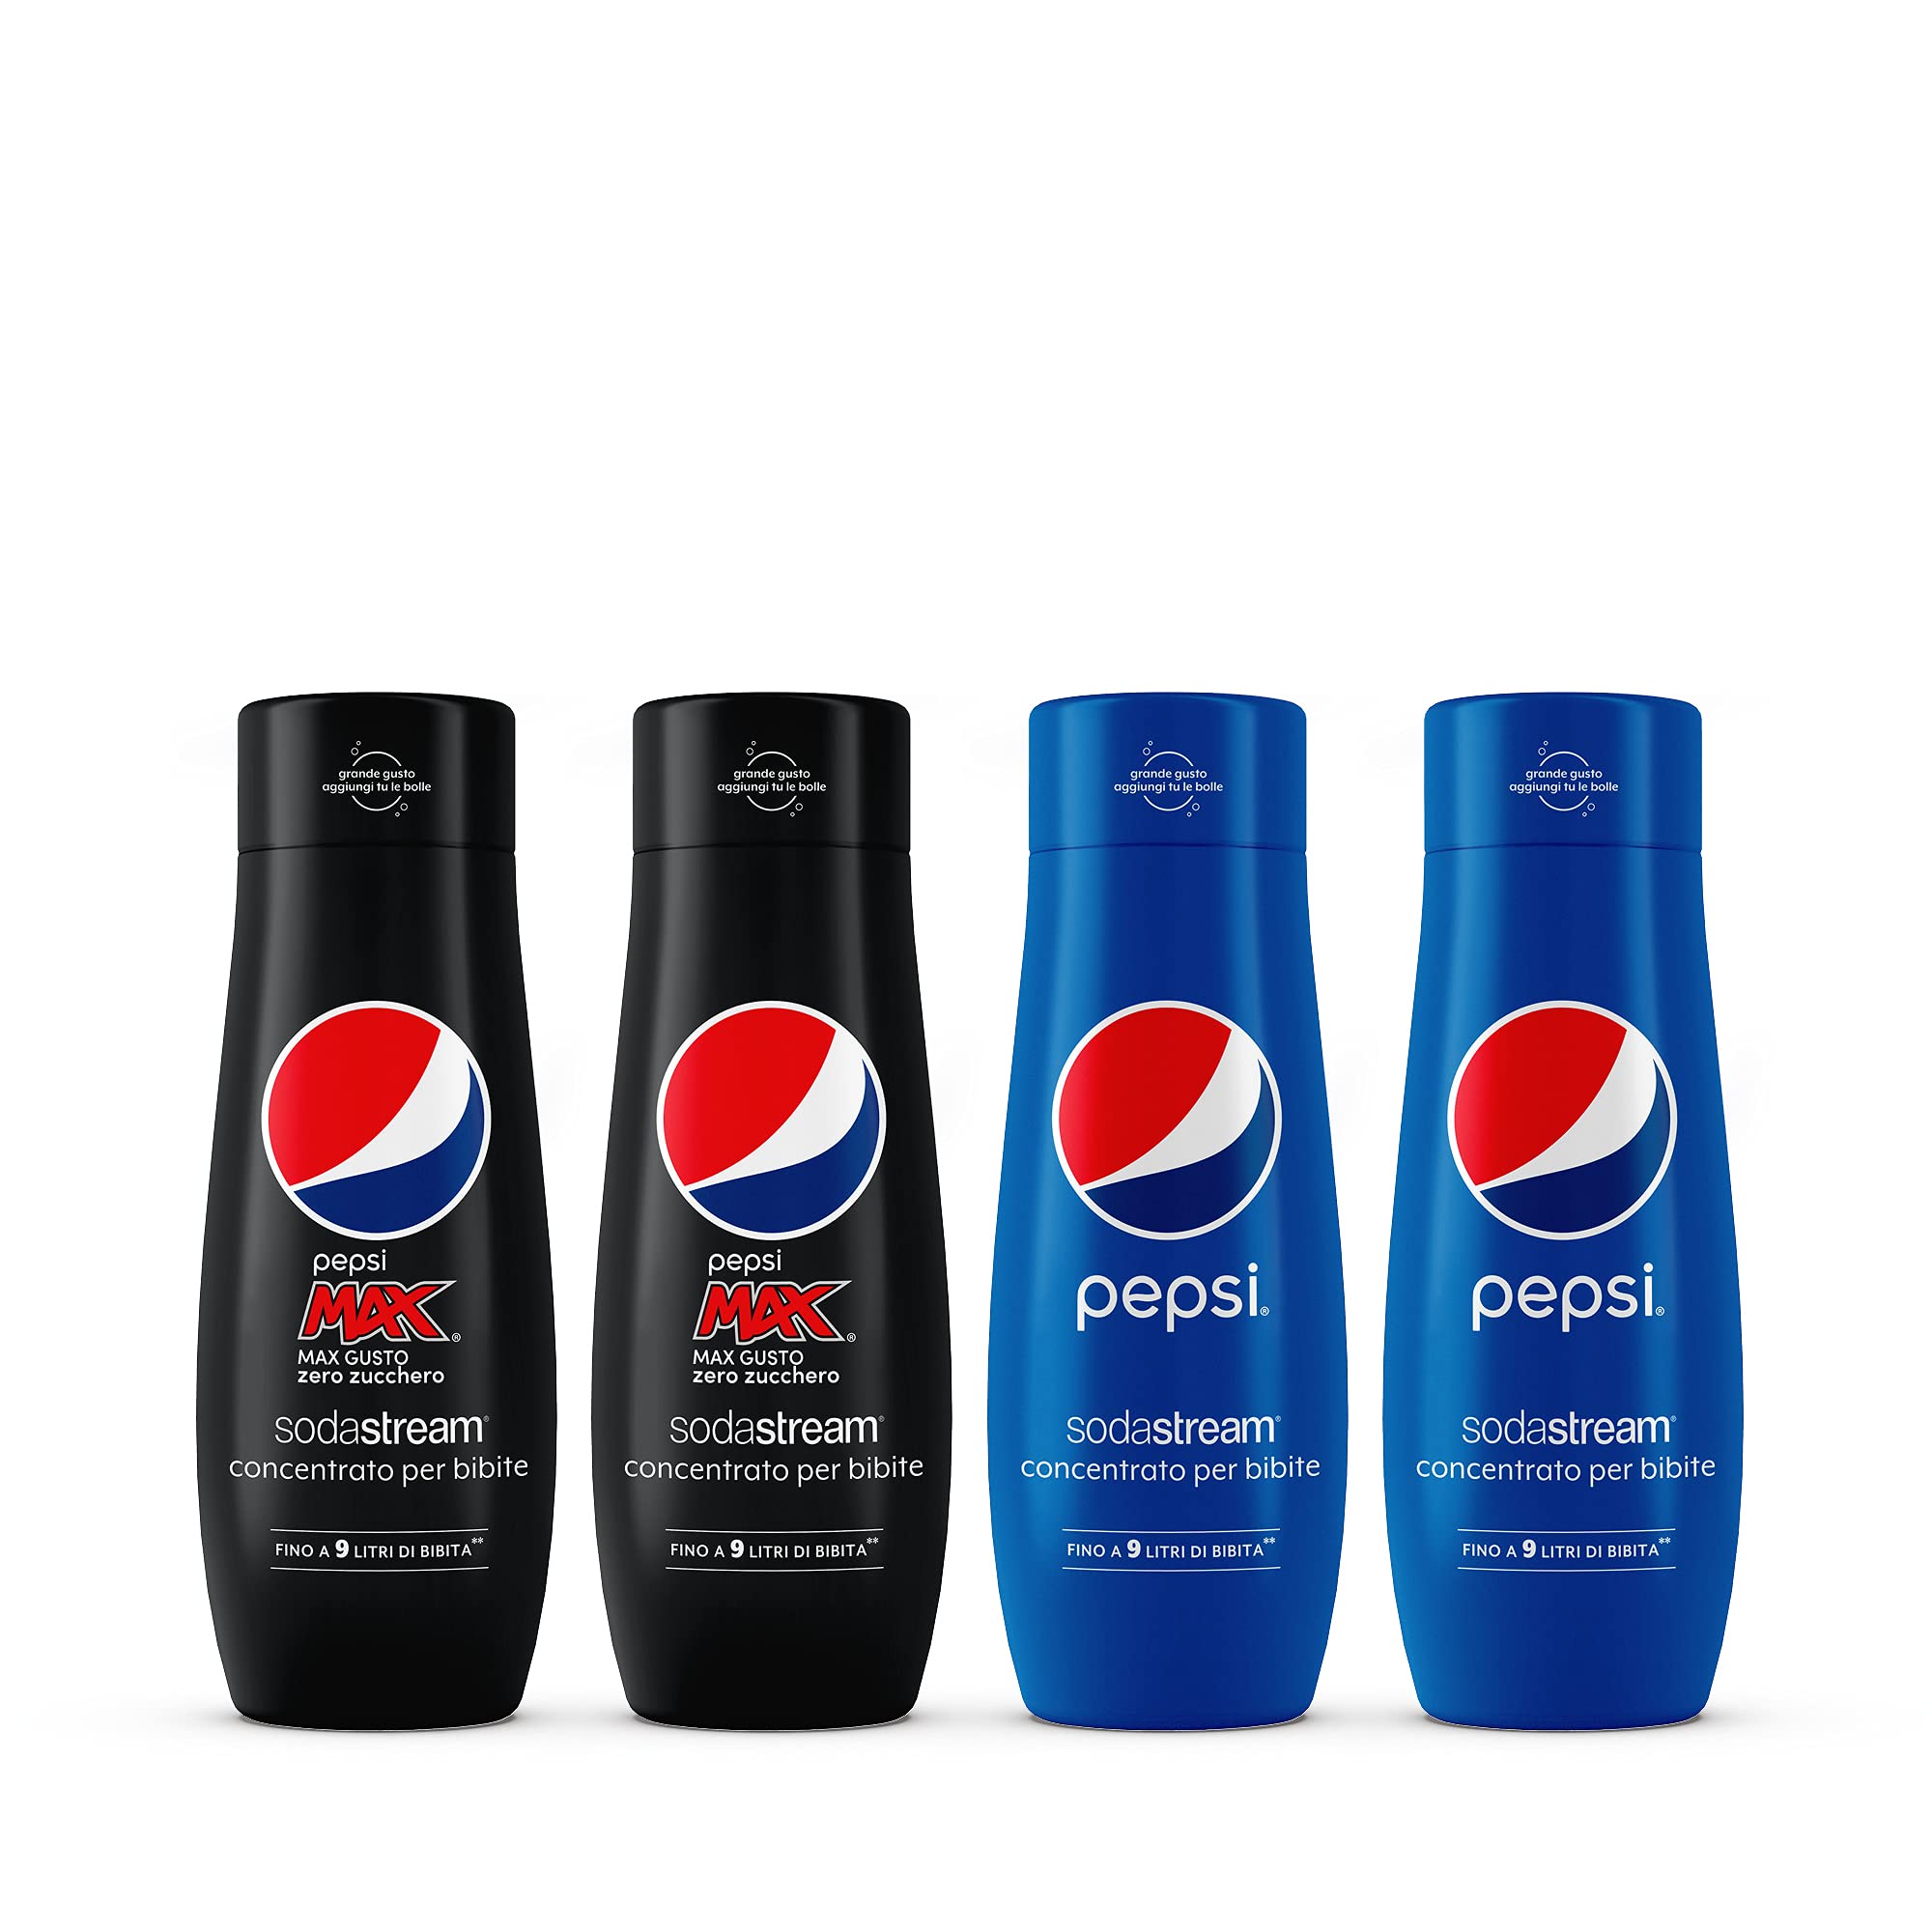 Sodastream Mix Konzentrate X Pepsi + Pepsi Max Bundle, 1760 Milliliter